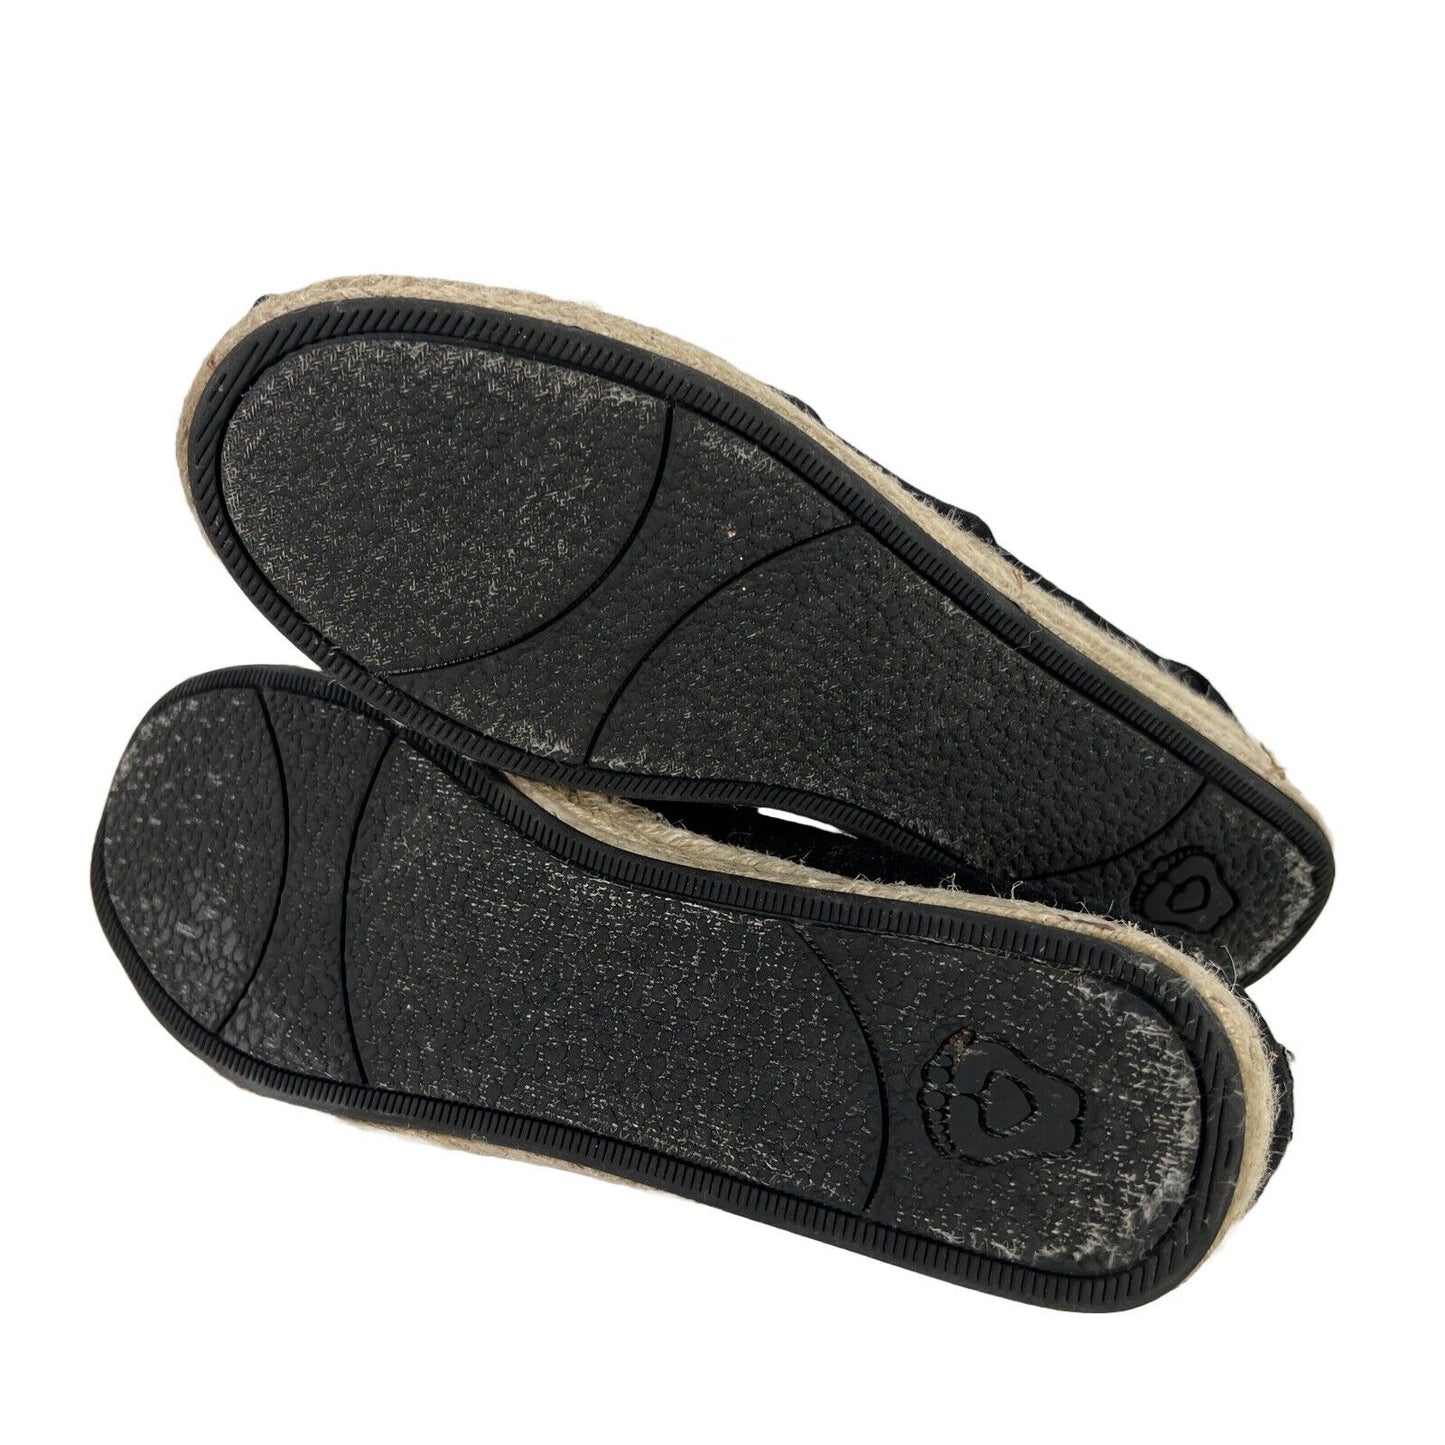 Bobs Women's Black Espadrille Wedge Shoes - 7.5